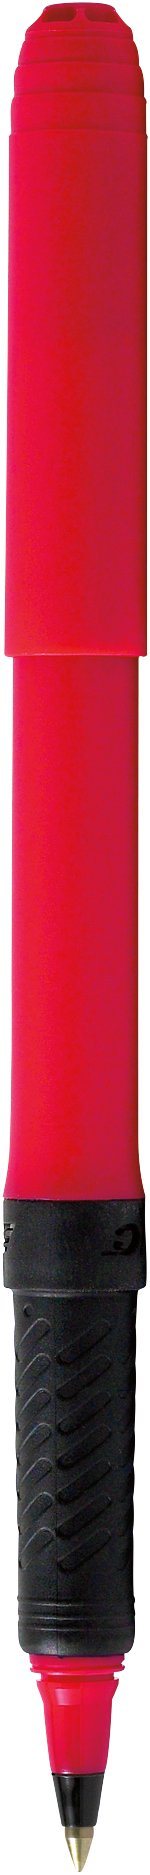 BIC® Grip Roller Pen Red Single Color 